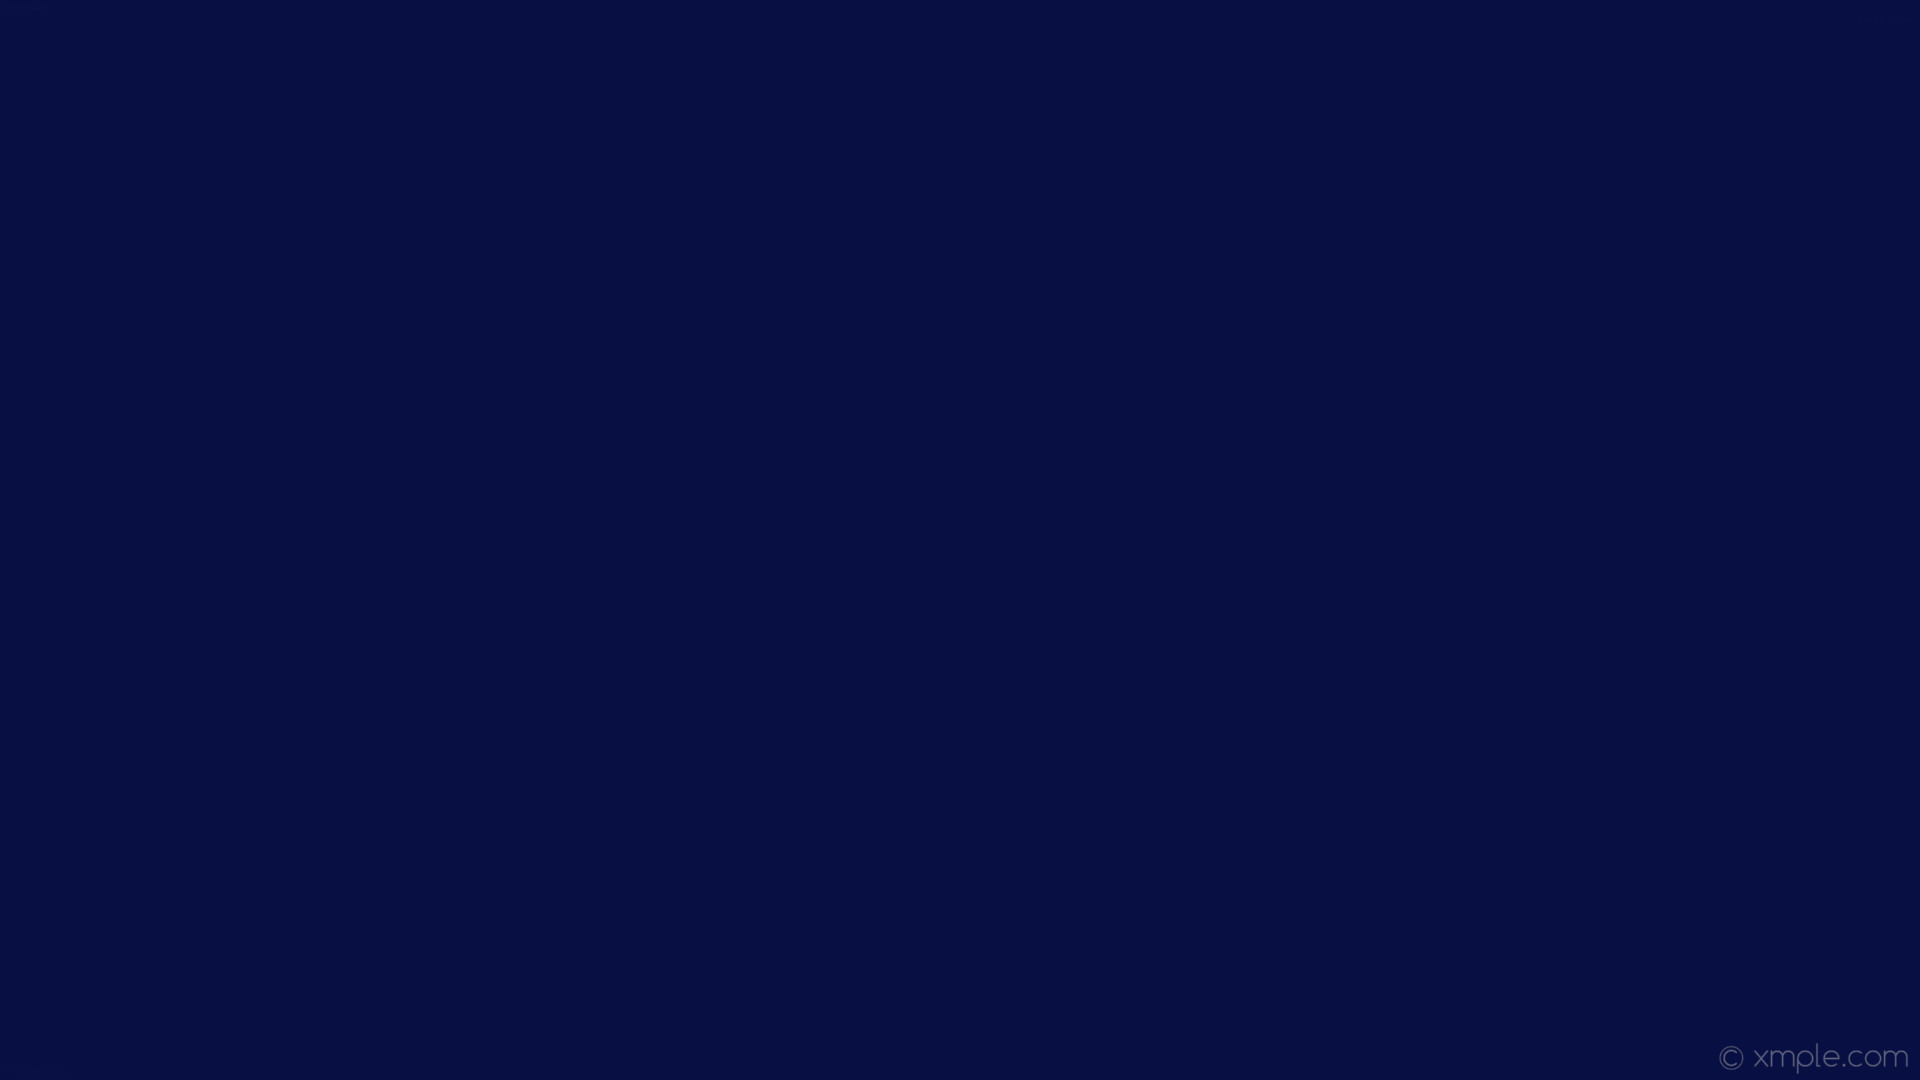 1920x1080 wallpaper solid color one colour single blue plain dark blue #070f43